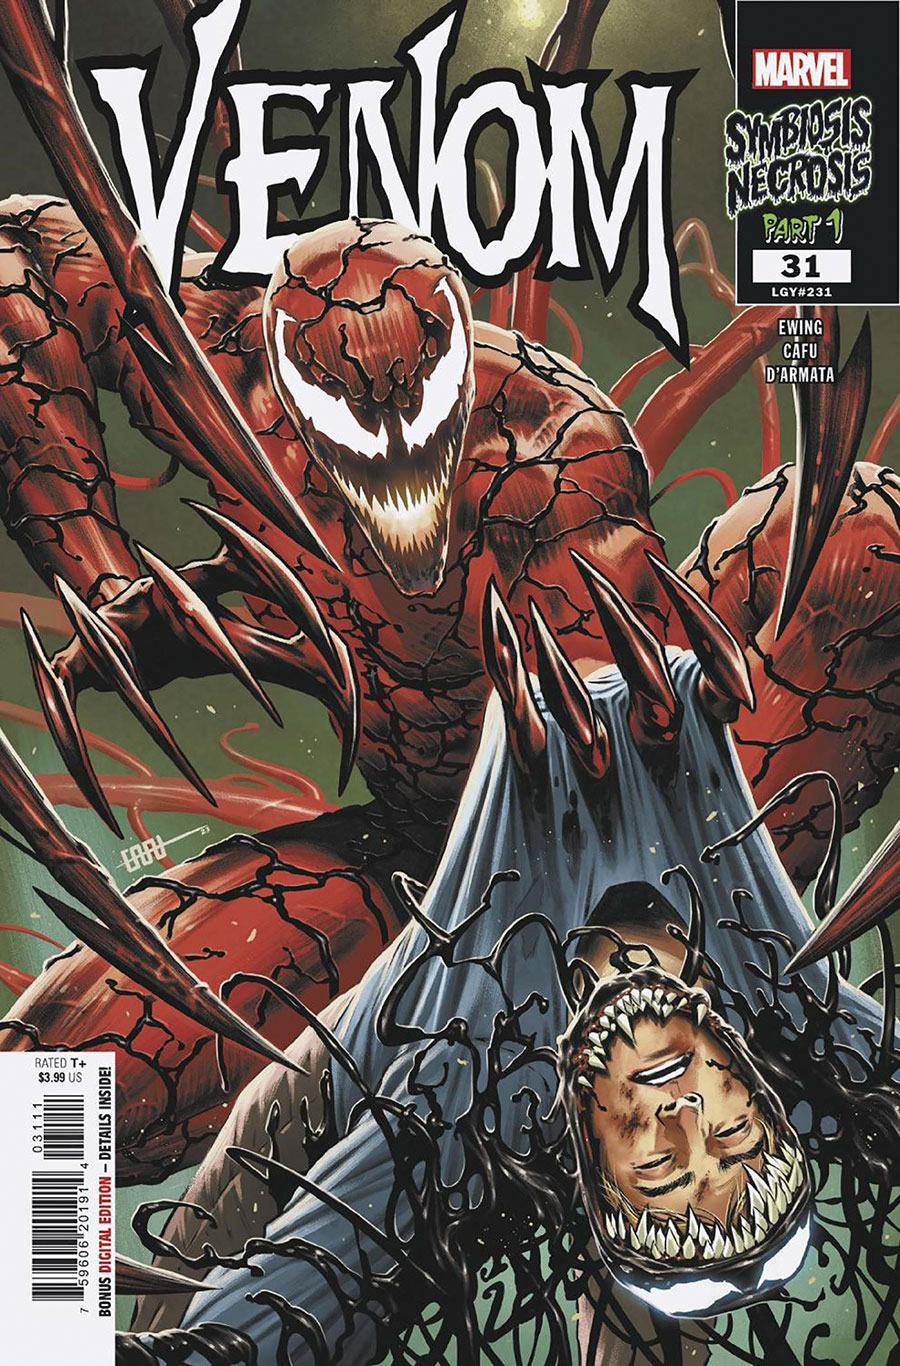 Venom Vol 5 #31 Cover A Regular CAFU Cover (Symbiosis Necrosis Part 1)